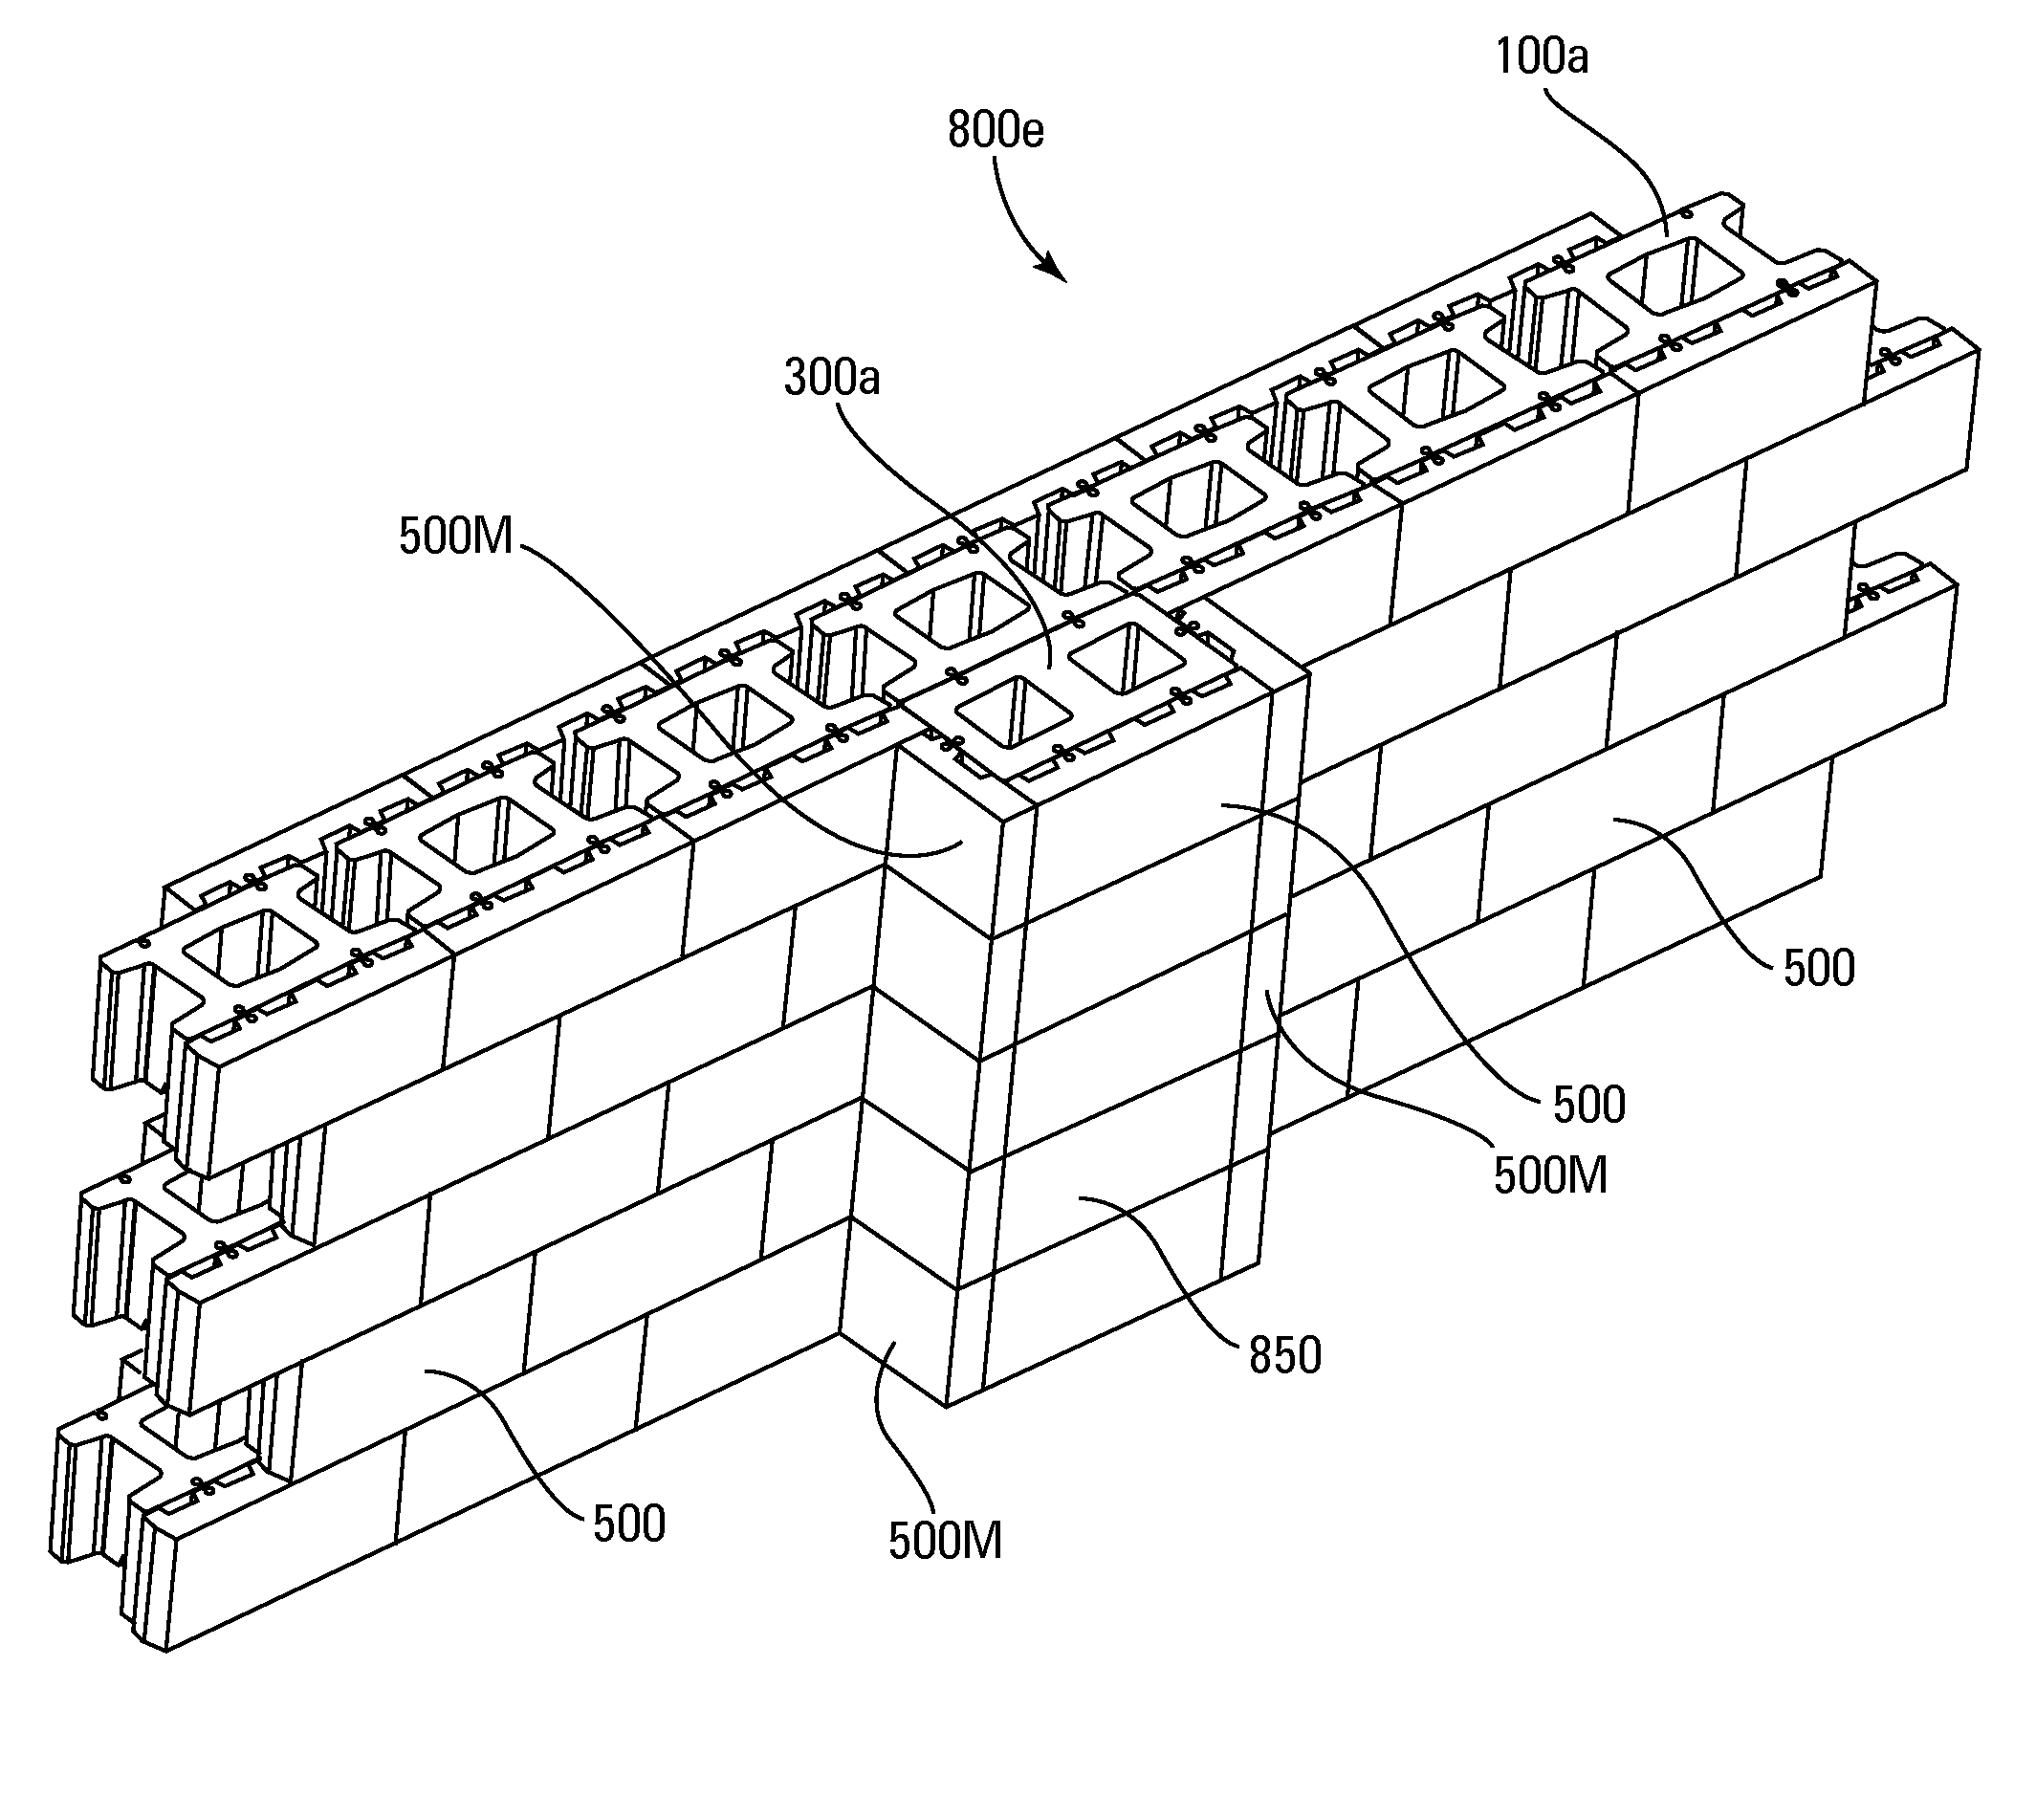 Wall blocks, veneer panels for wall blocks and method of constructing walls